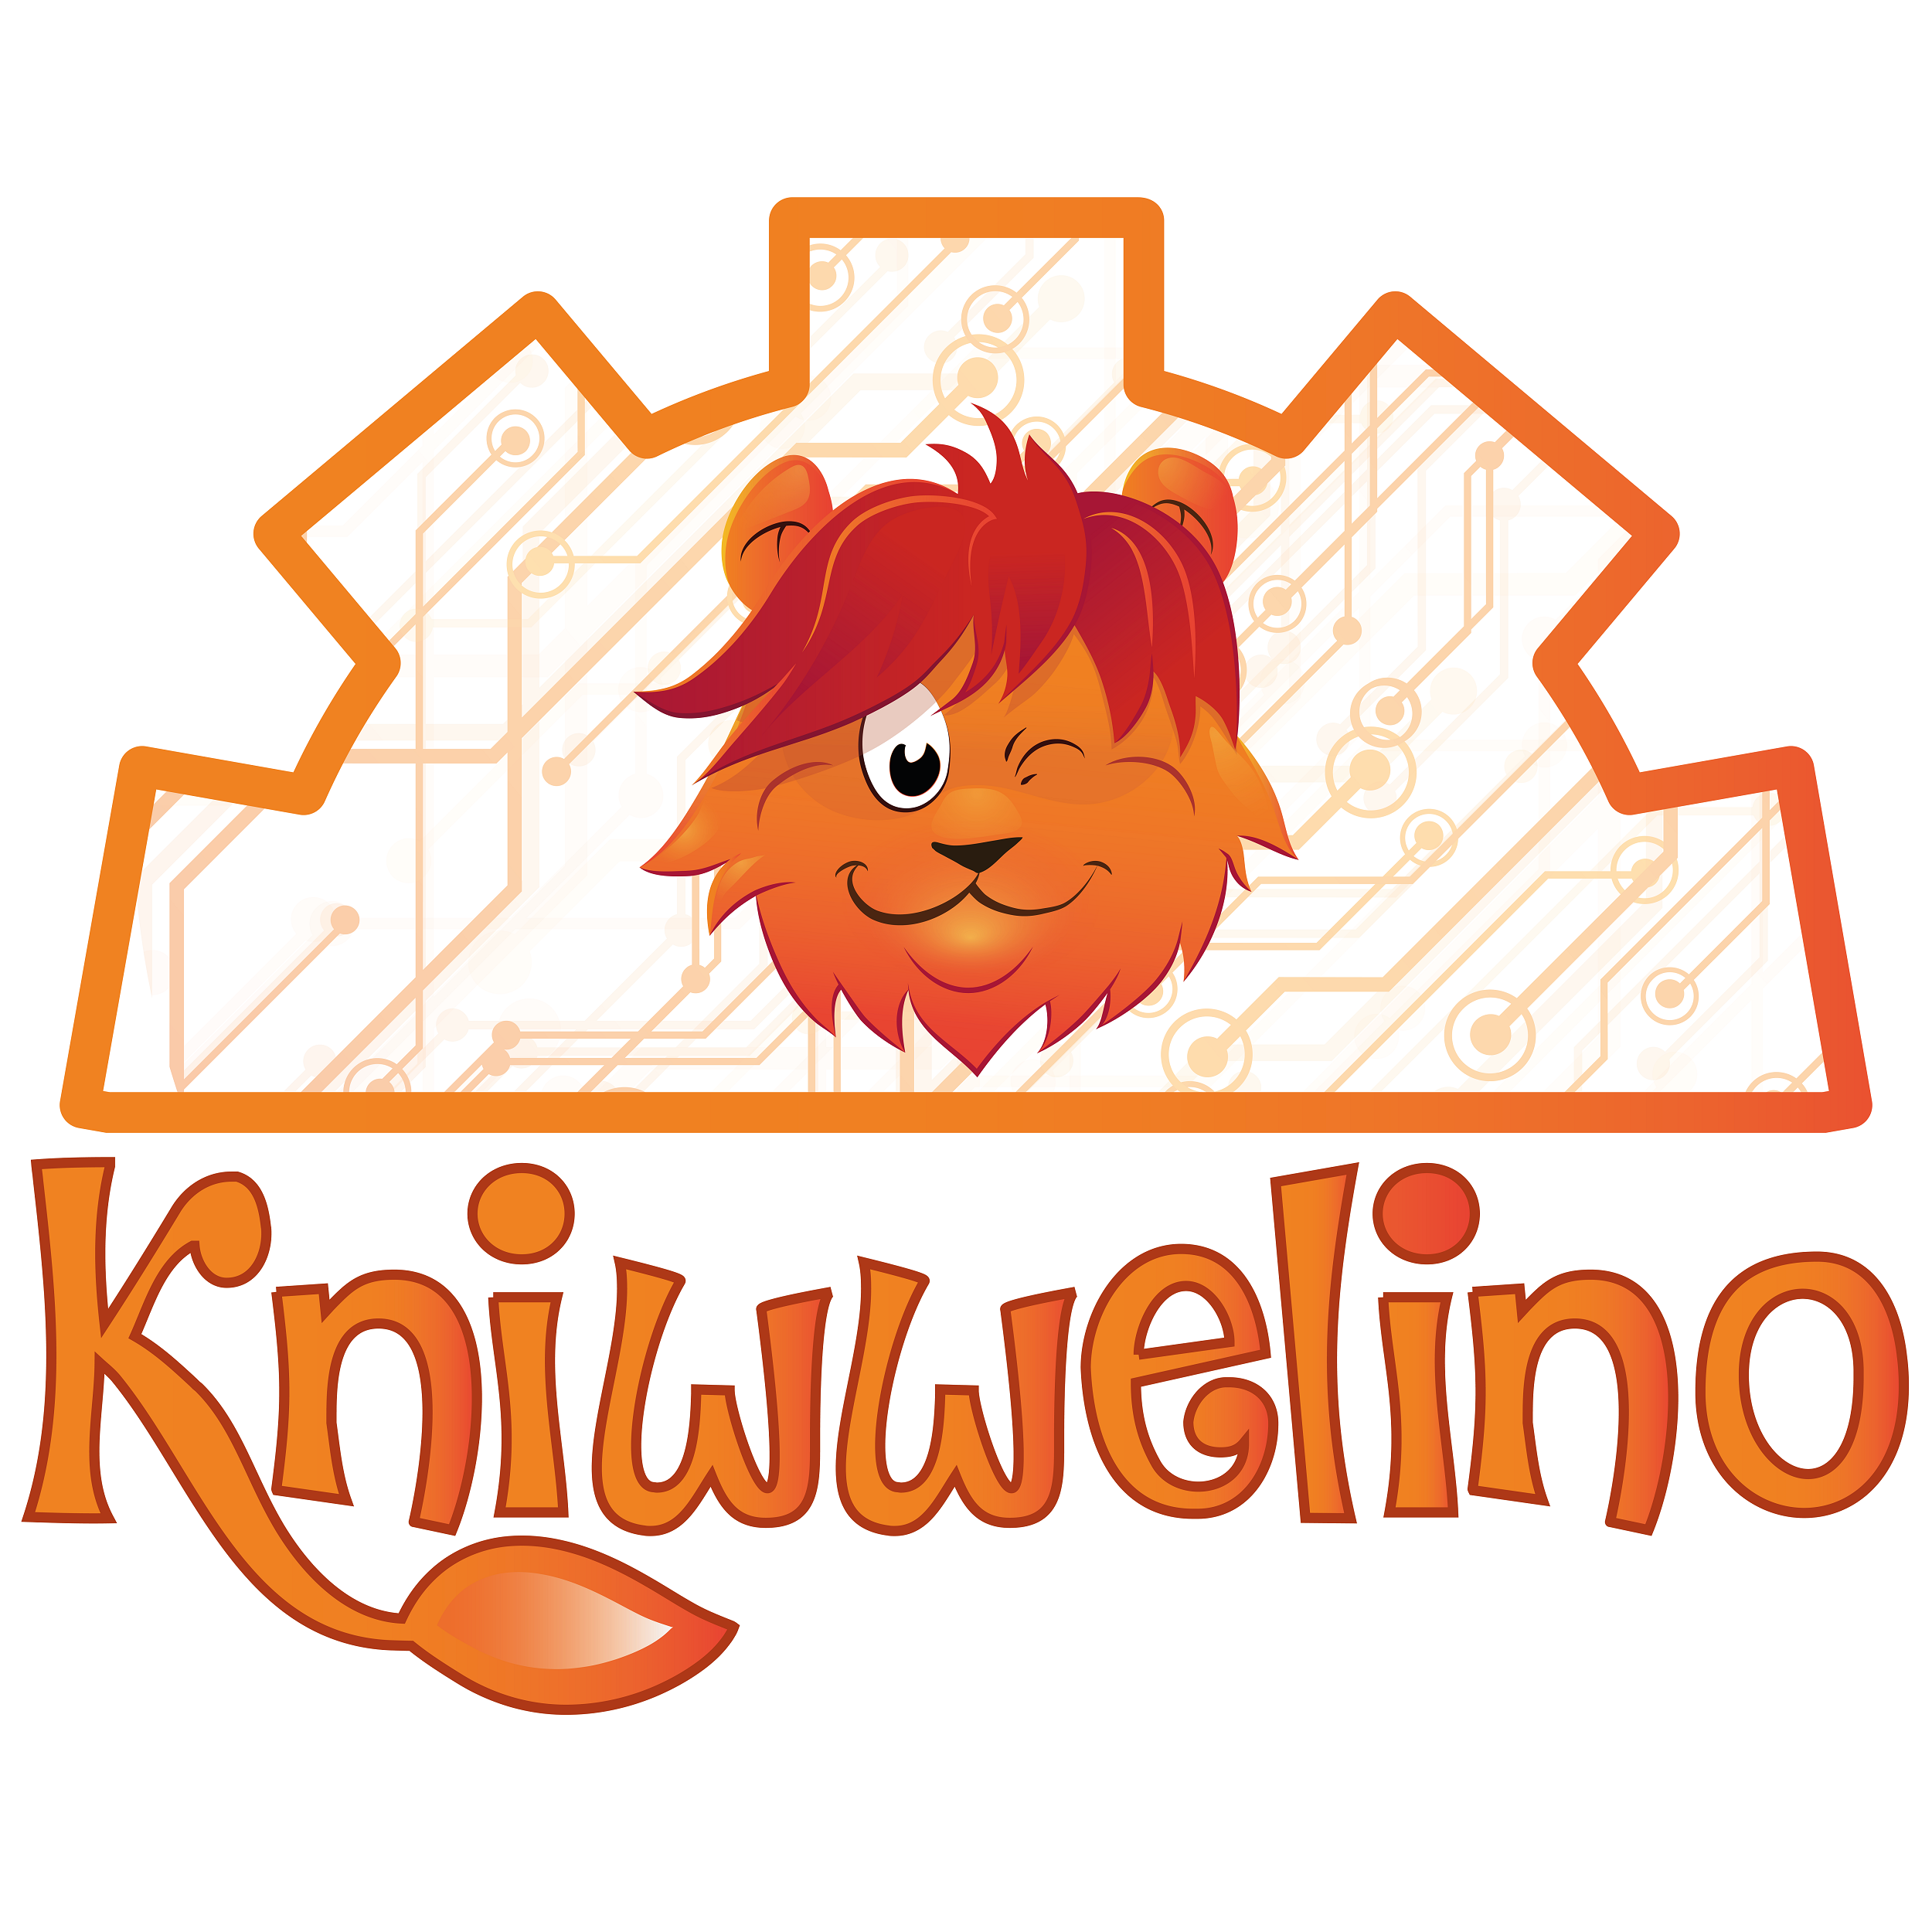 Kniwwelino fond avec Lino et le logo